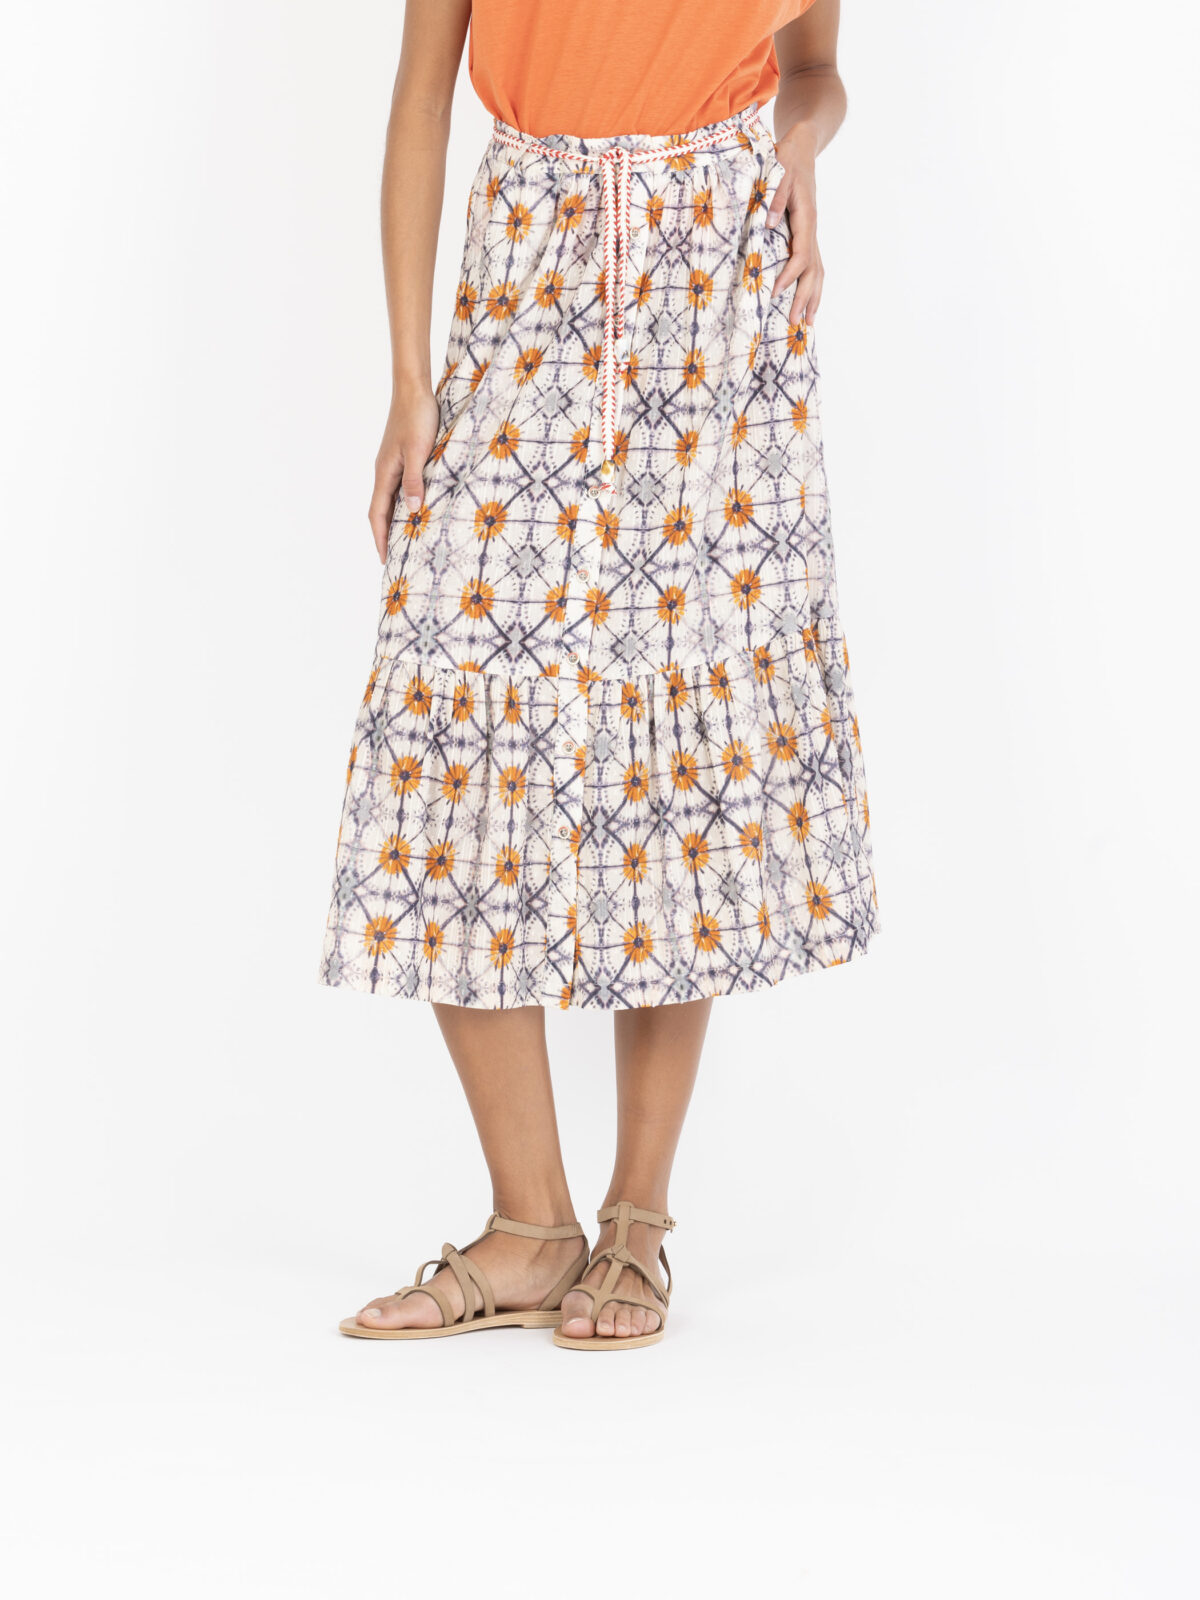 journal-skirt-floral-side-pockets-belt-ruffle-lapetitefrancaise-matchboxathens